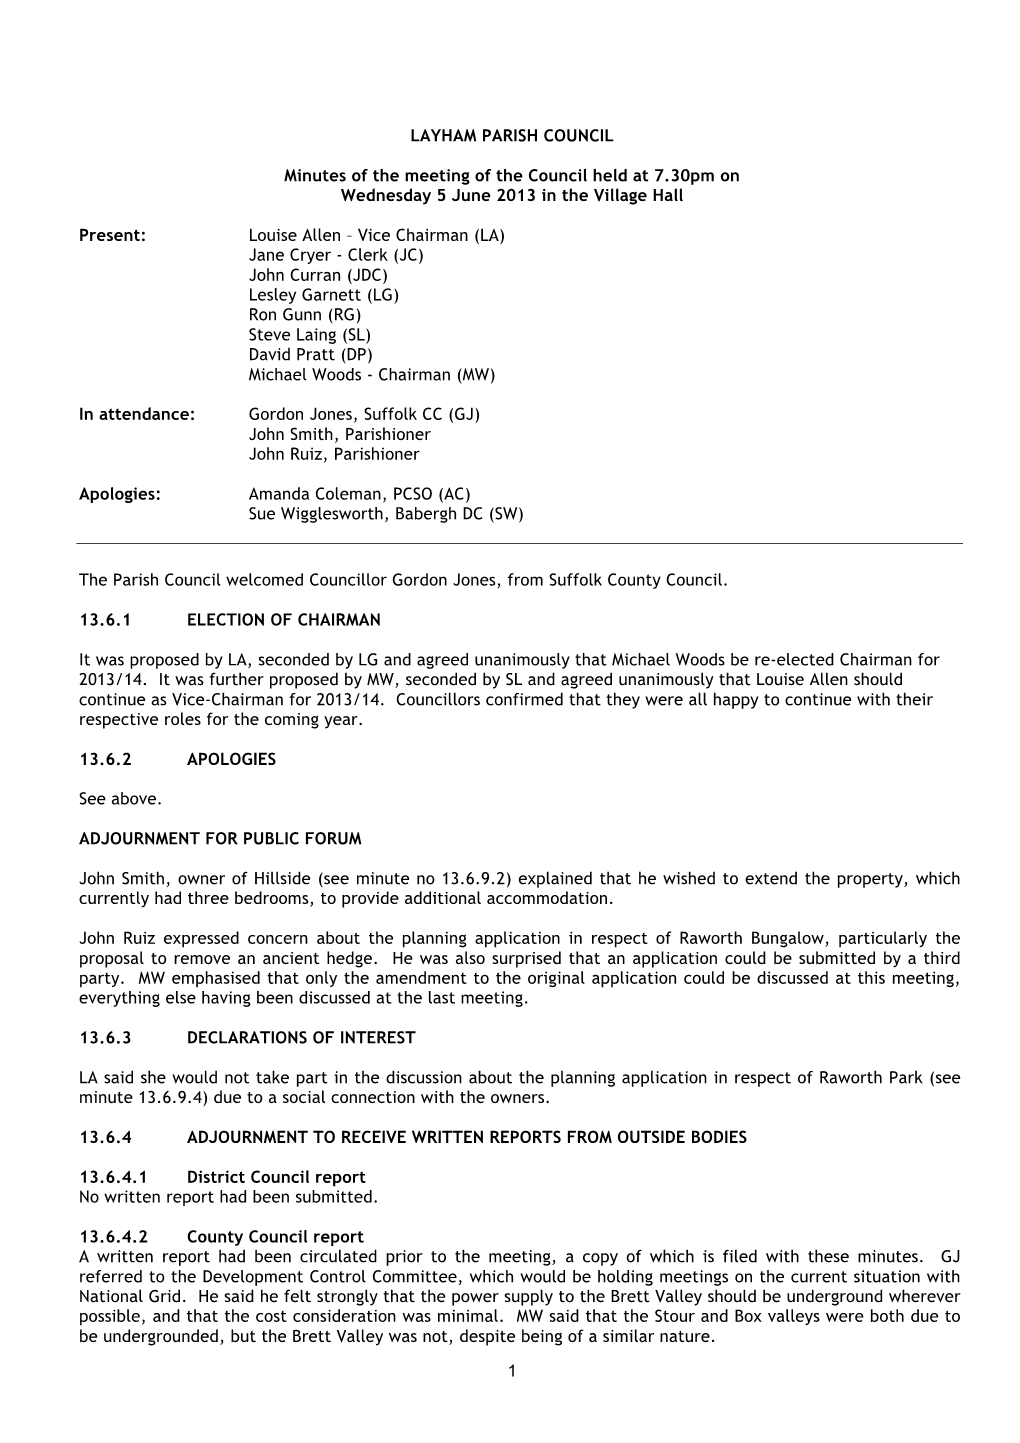 Minutes of Layham Parish Council Meeting 5 June 2013